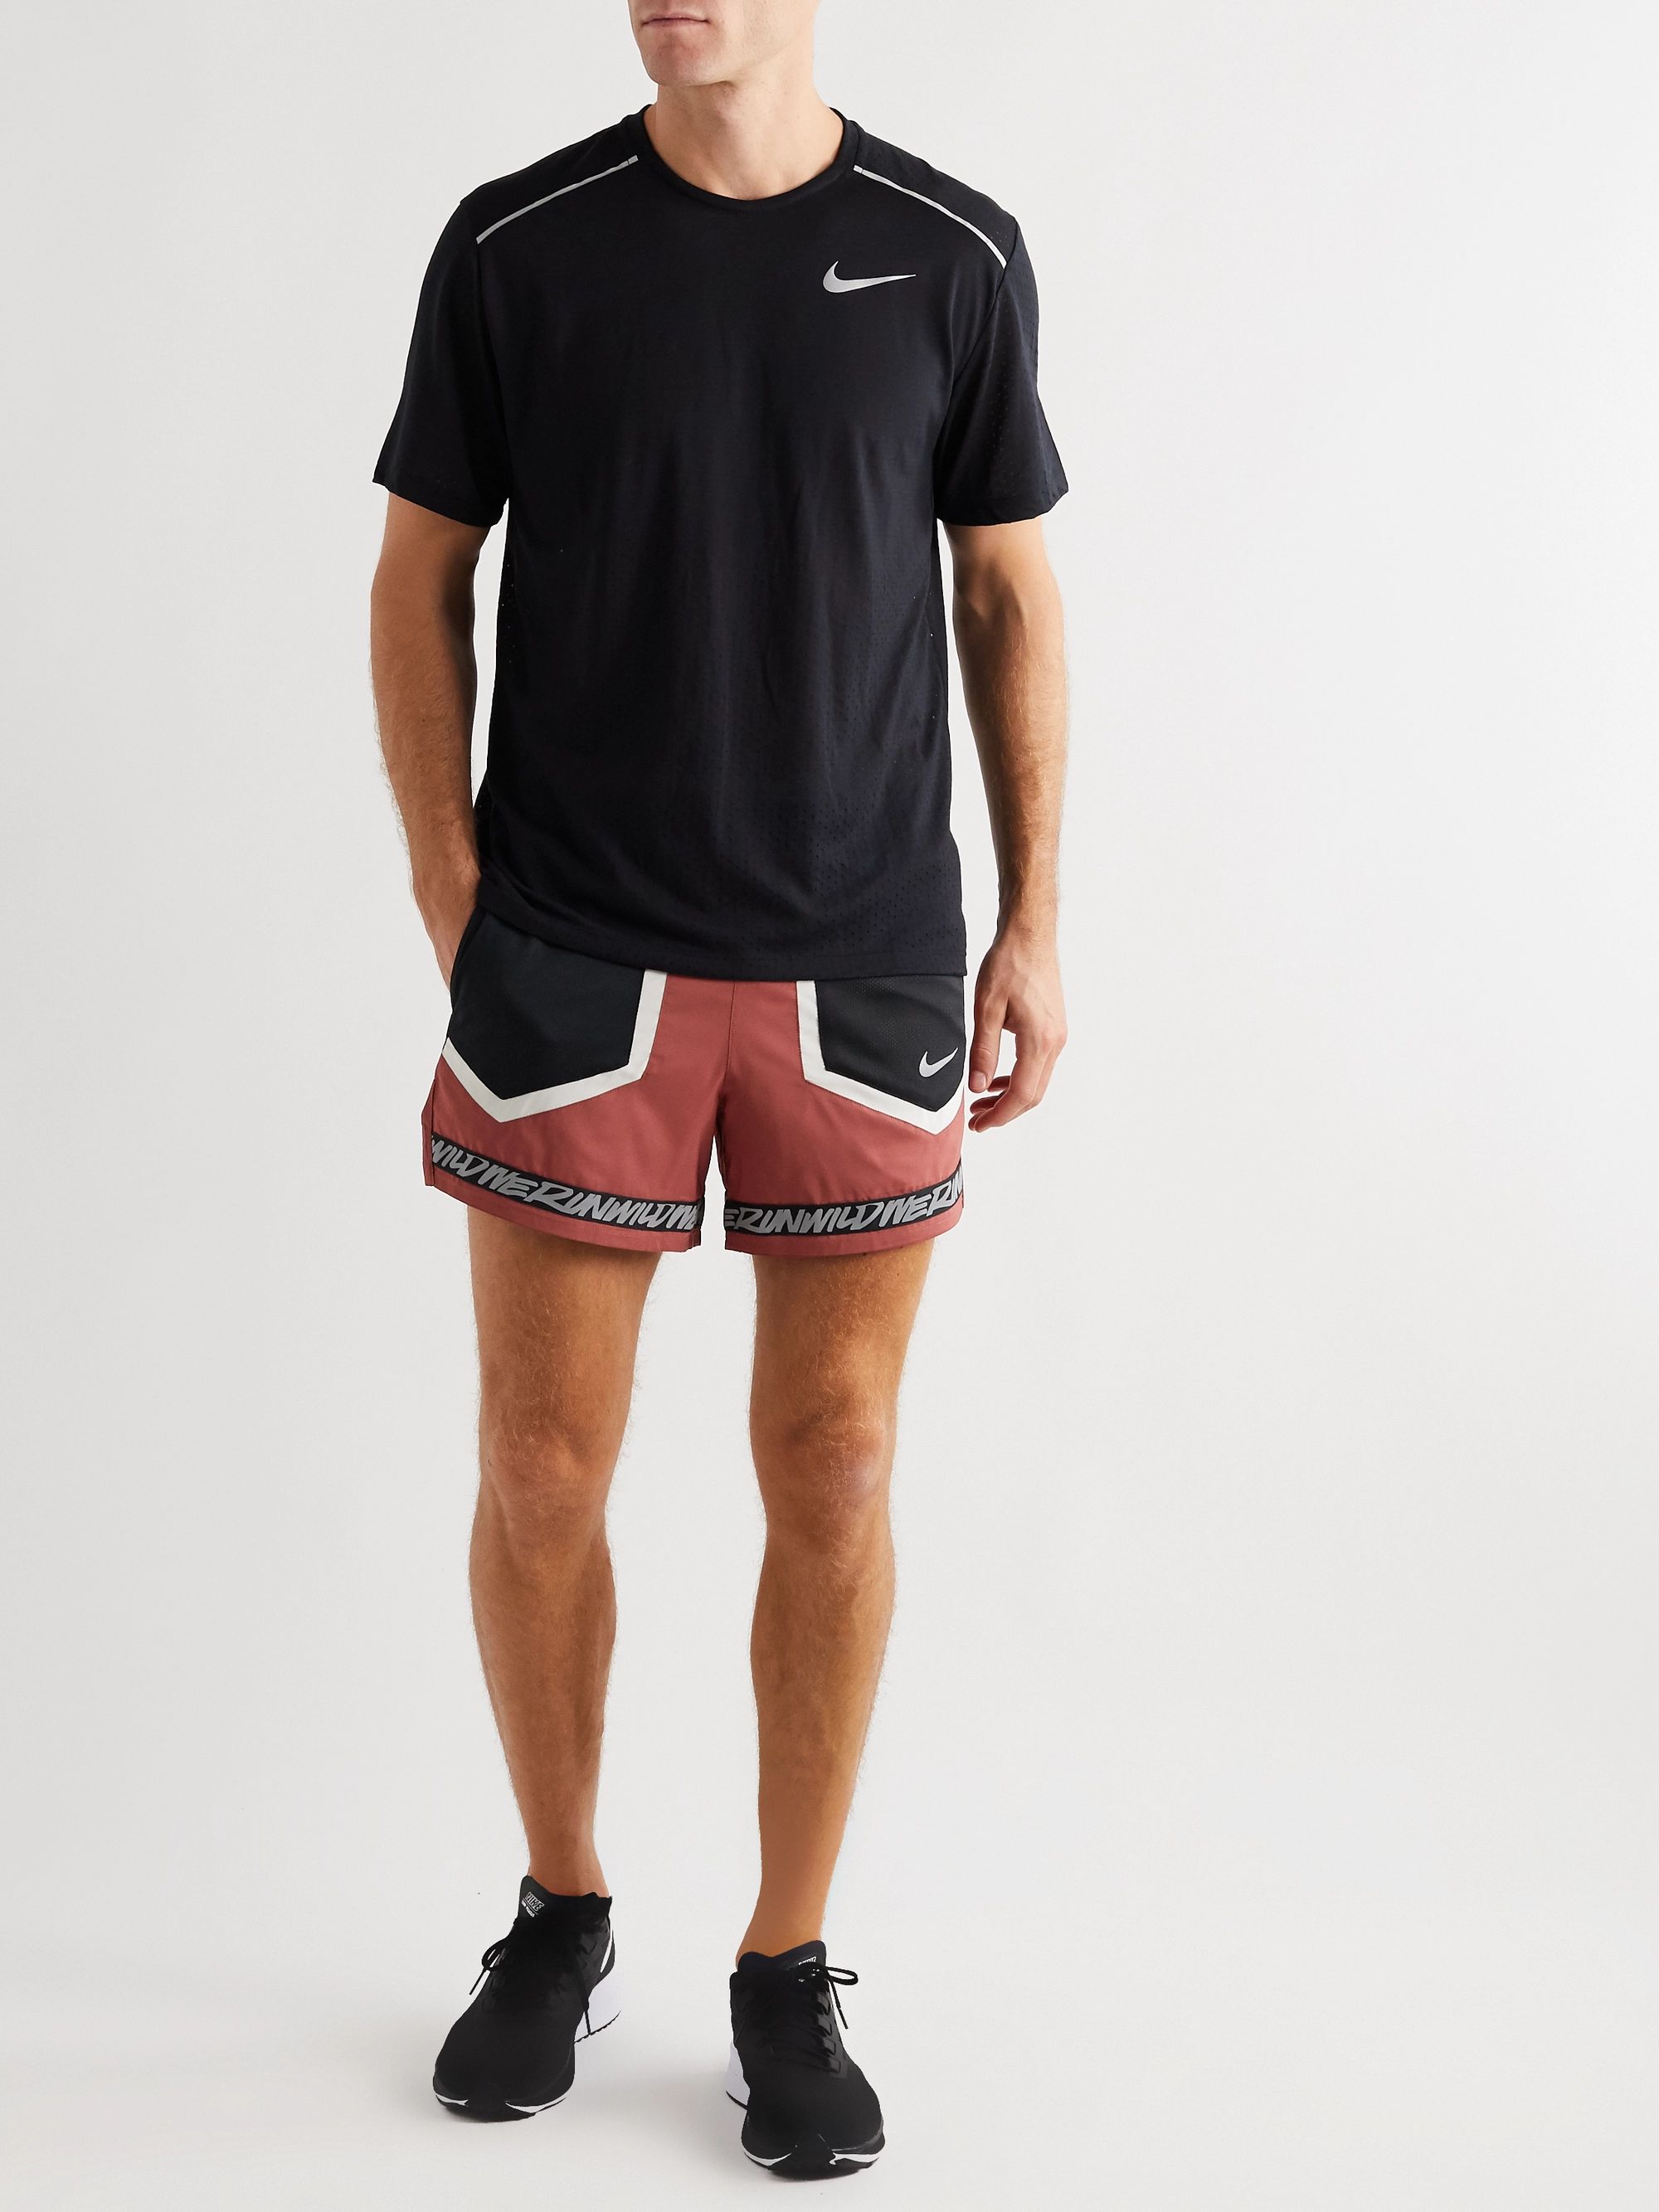 nike flex stride printed shorts